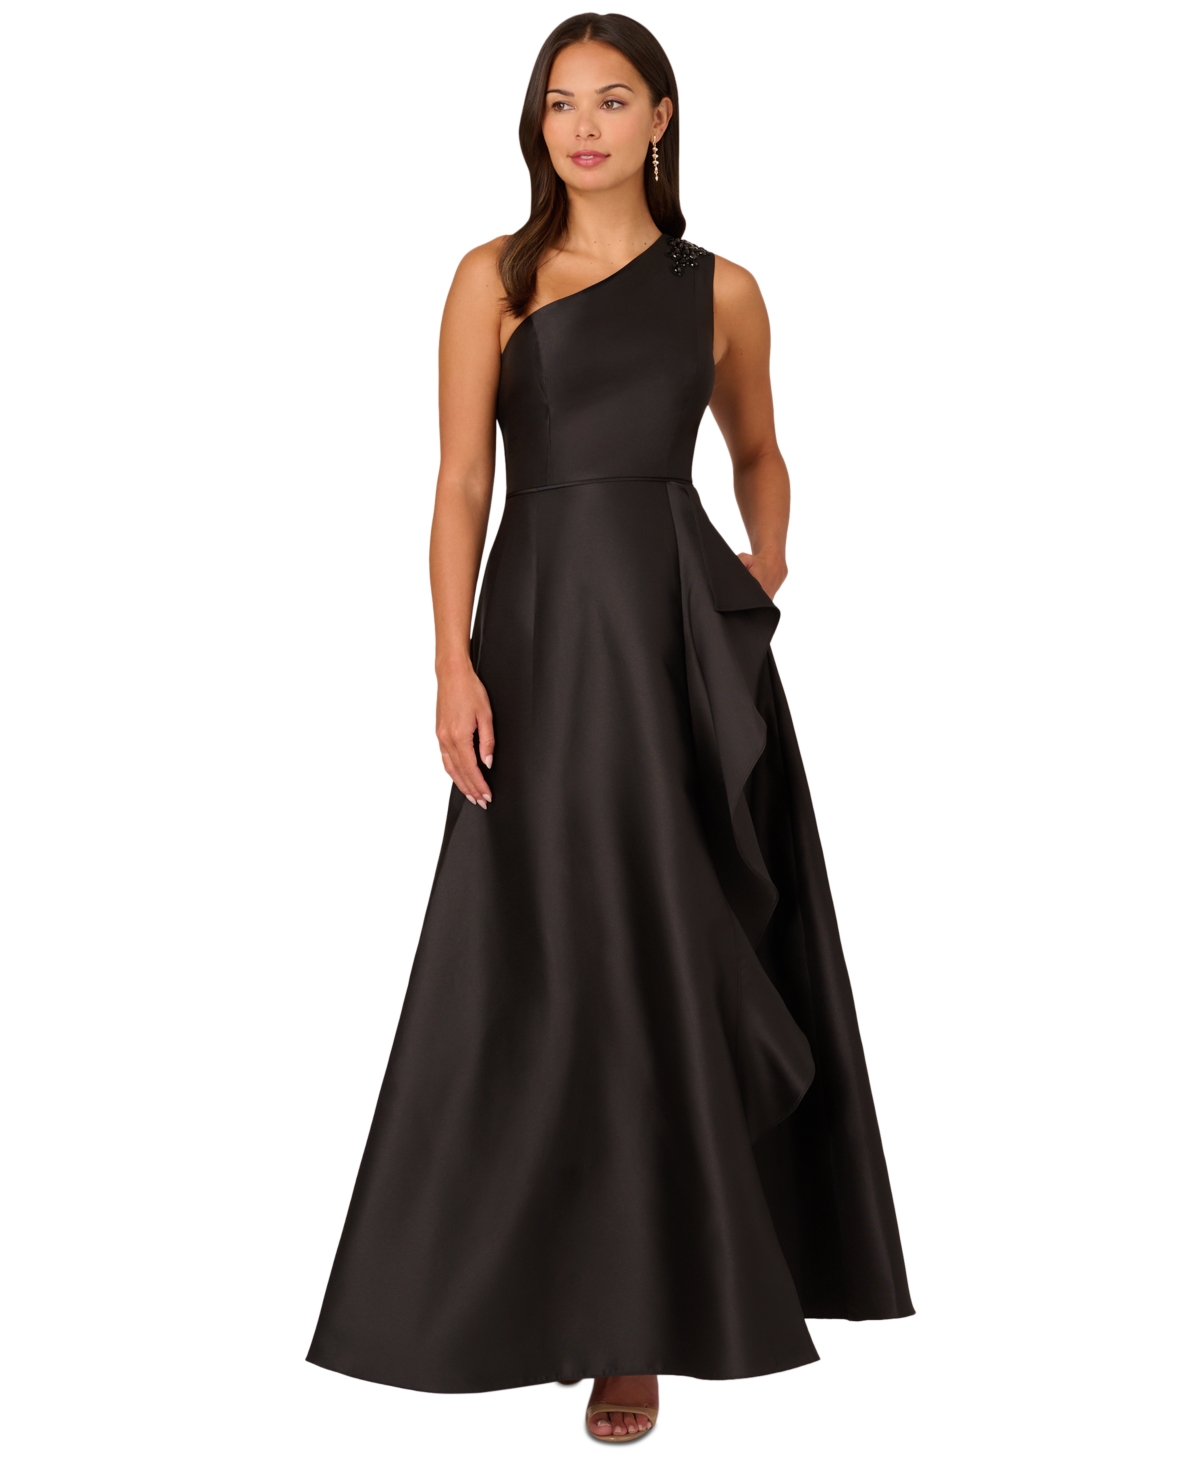 Women's Embellished One-Shoulder Sleeveless Ballgown - Black